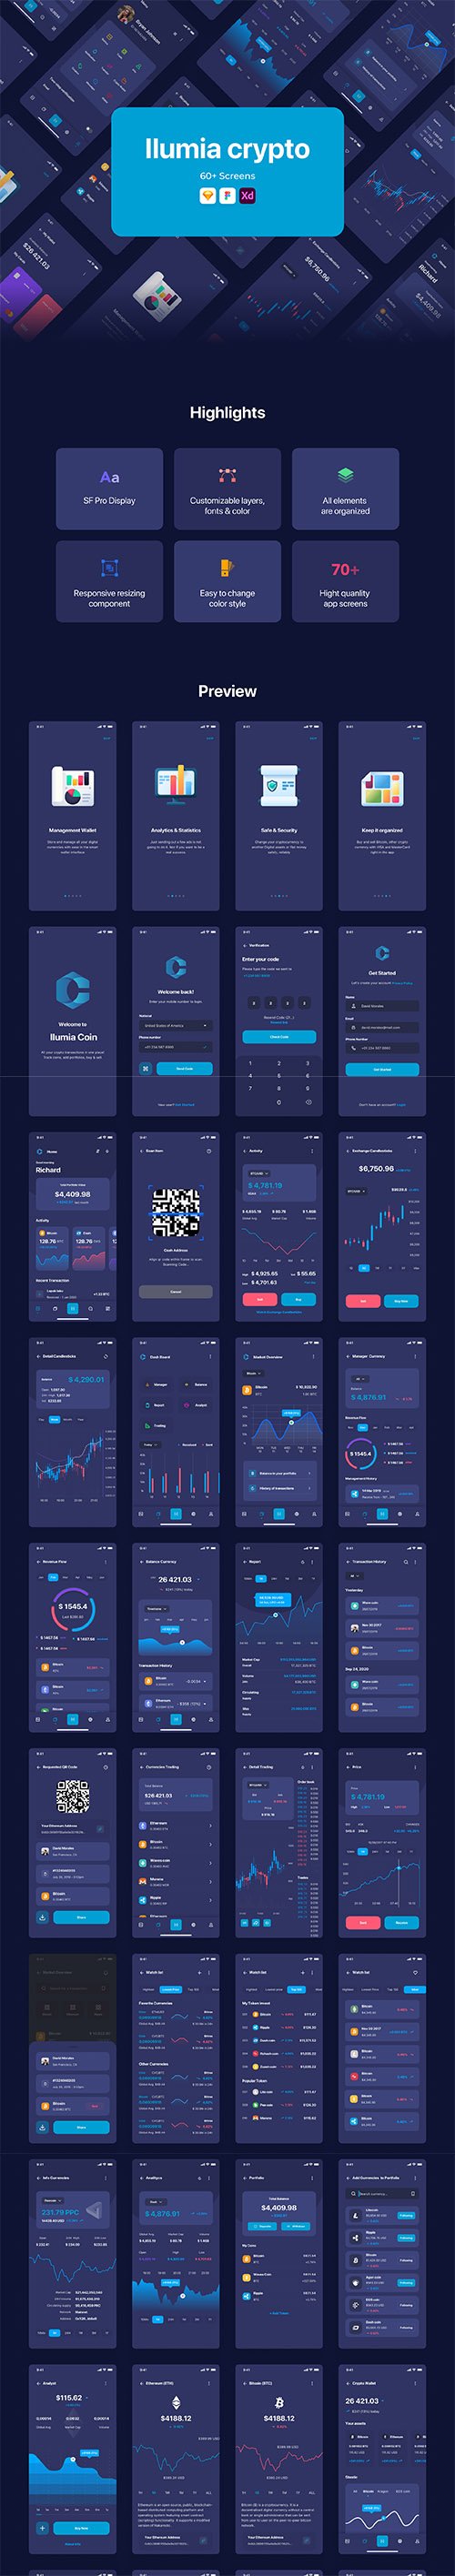 Ui8 - Ilumia Crypto Mobile App